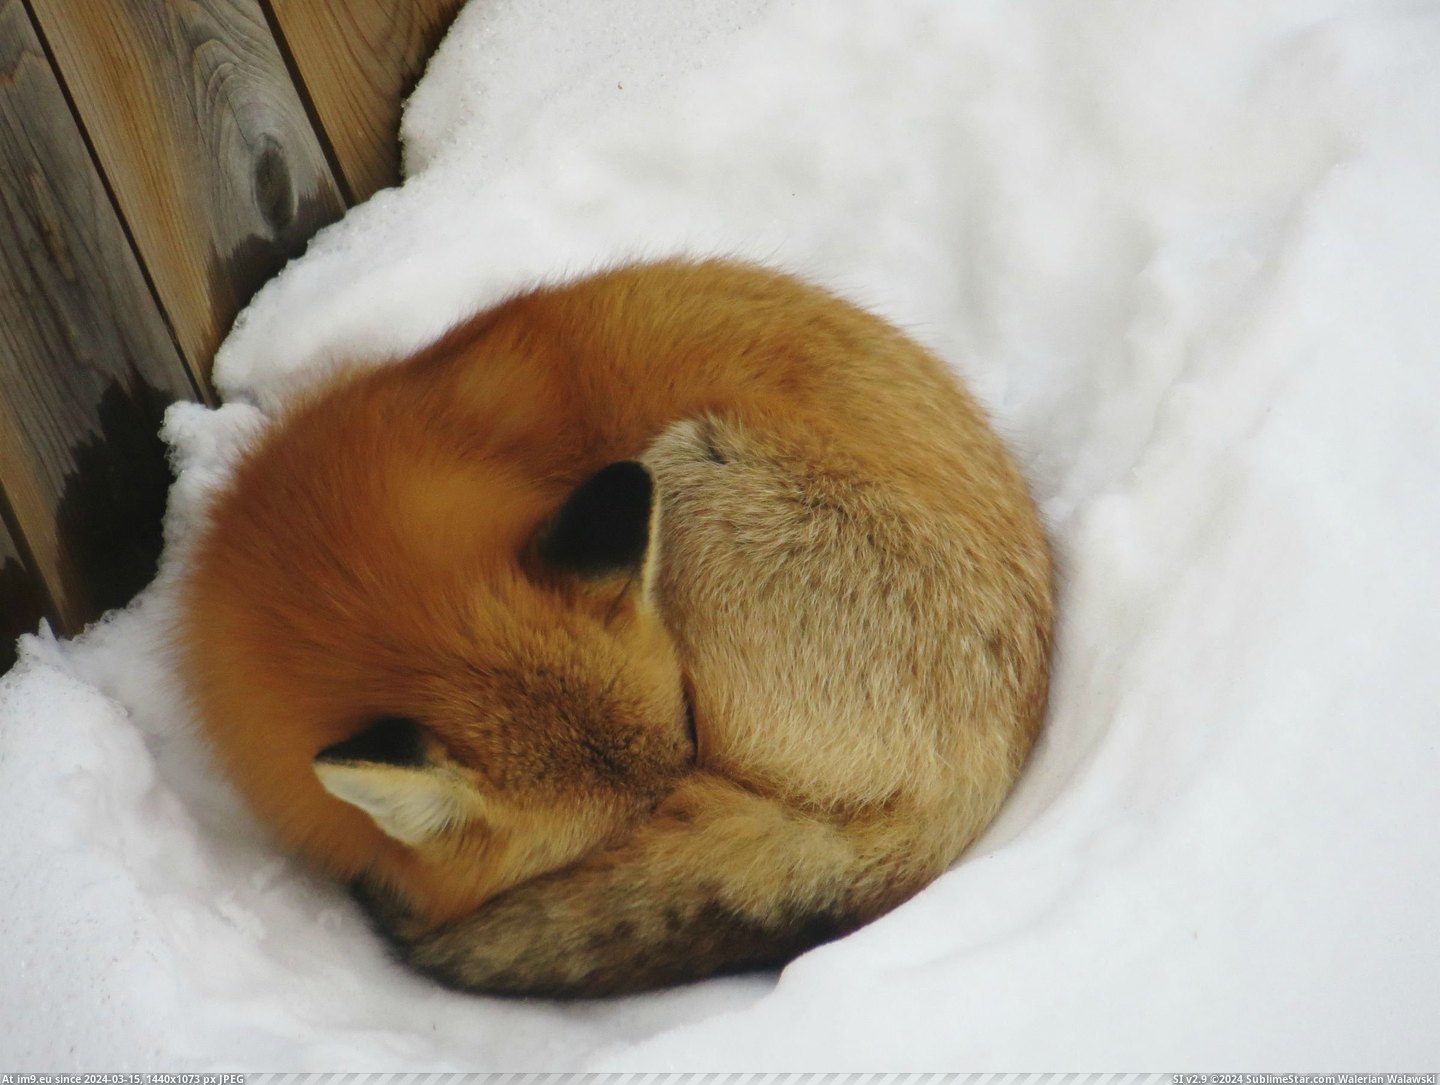 #Red #Canada #Alberta #Backyard #Fox #Sleeping [Pics] Red fox sleeping in my backyard! Alberta, Canada. 2 Pic. (Bild von album My r/PICS favs))